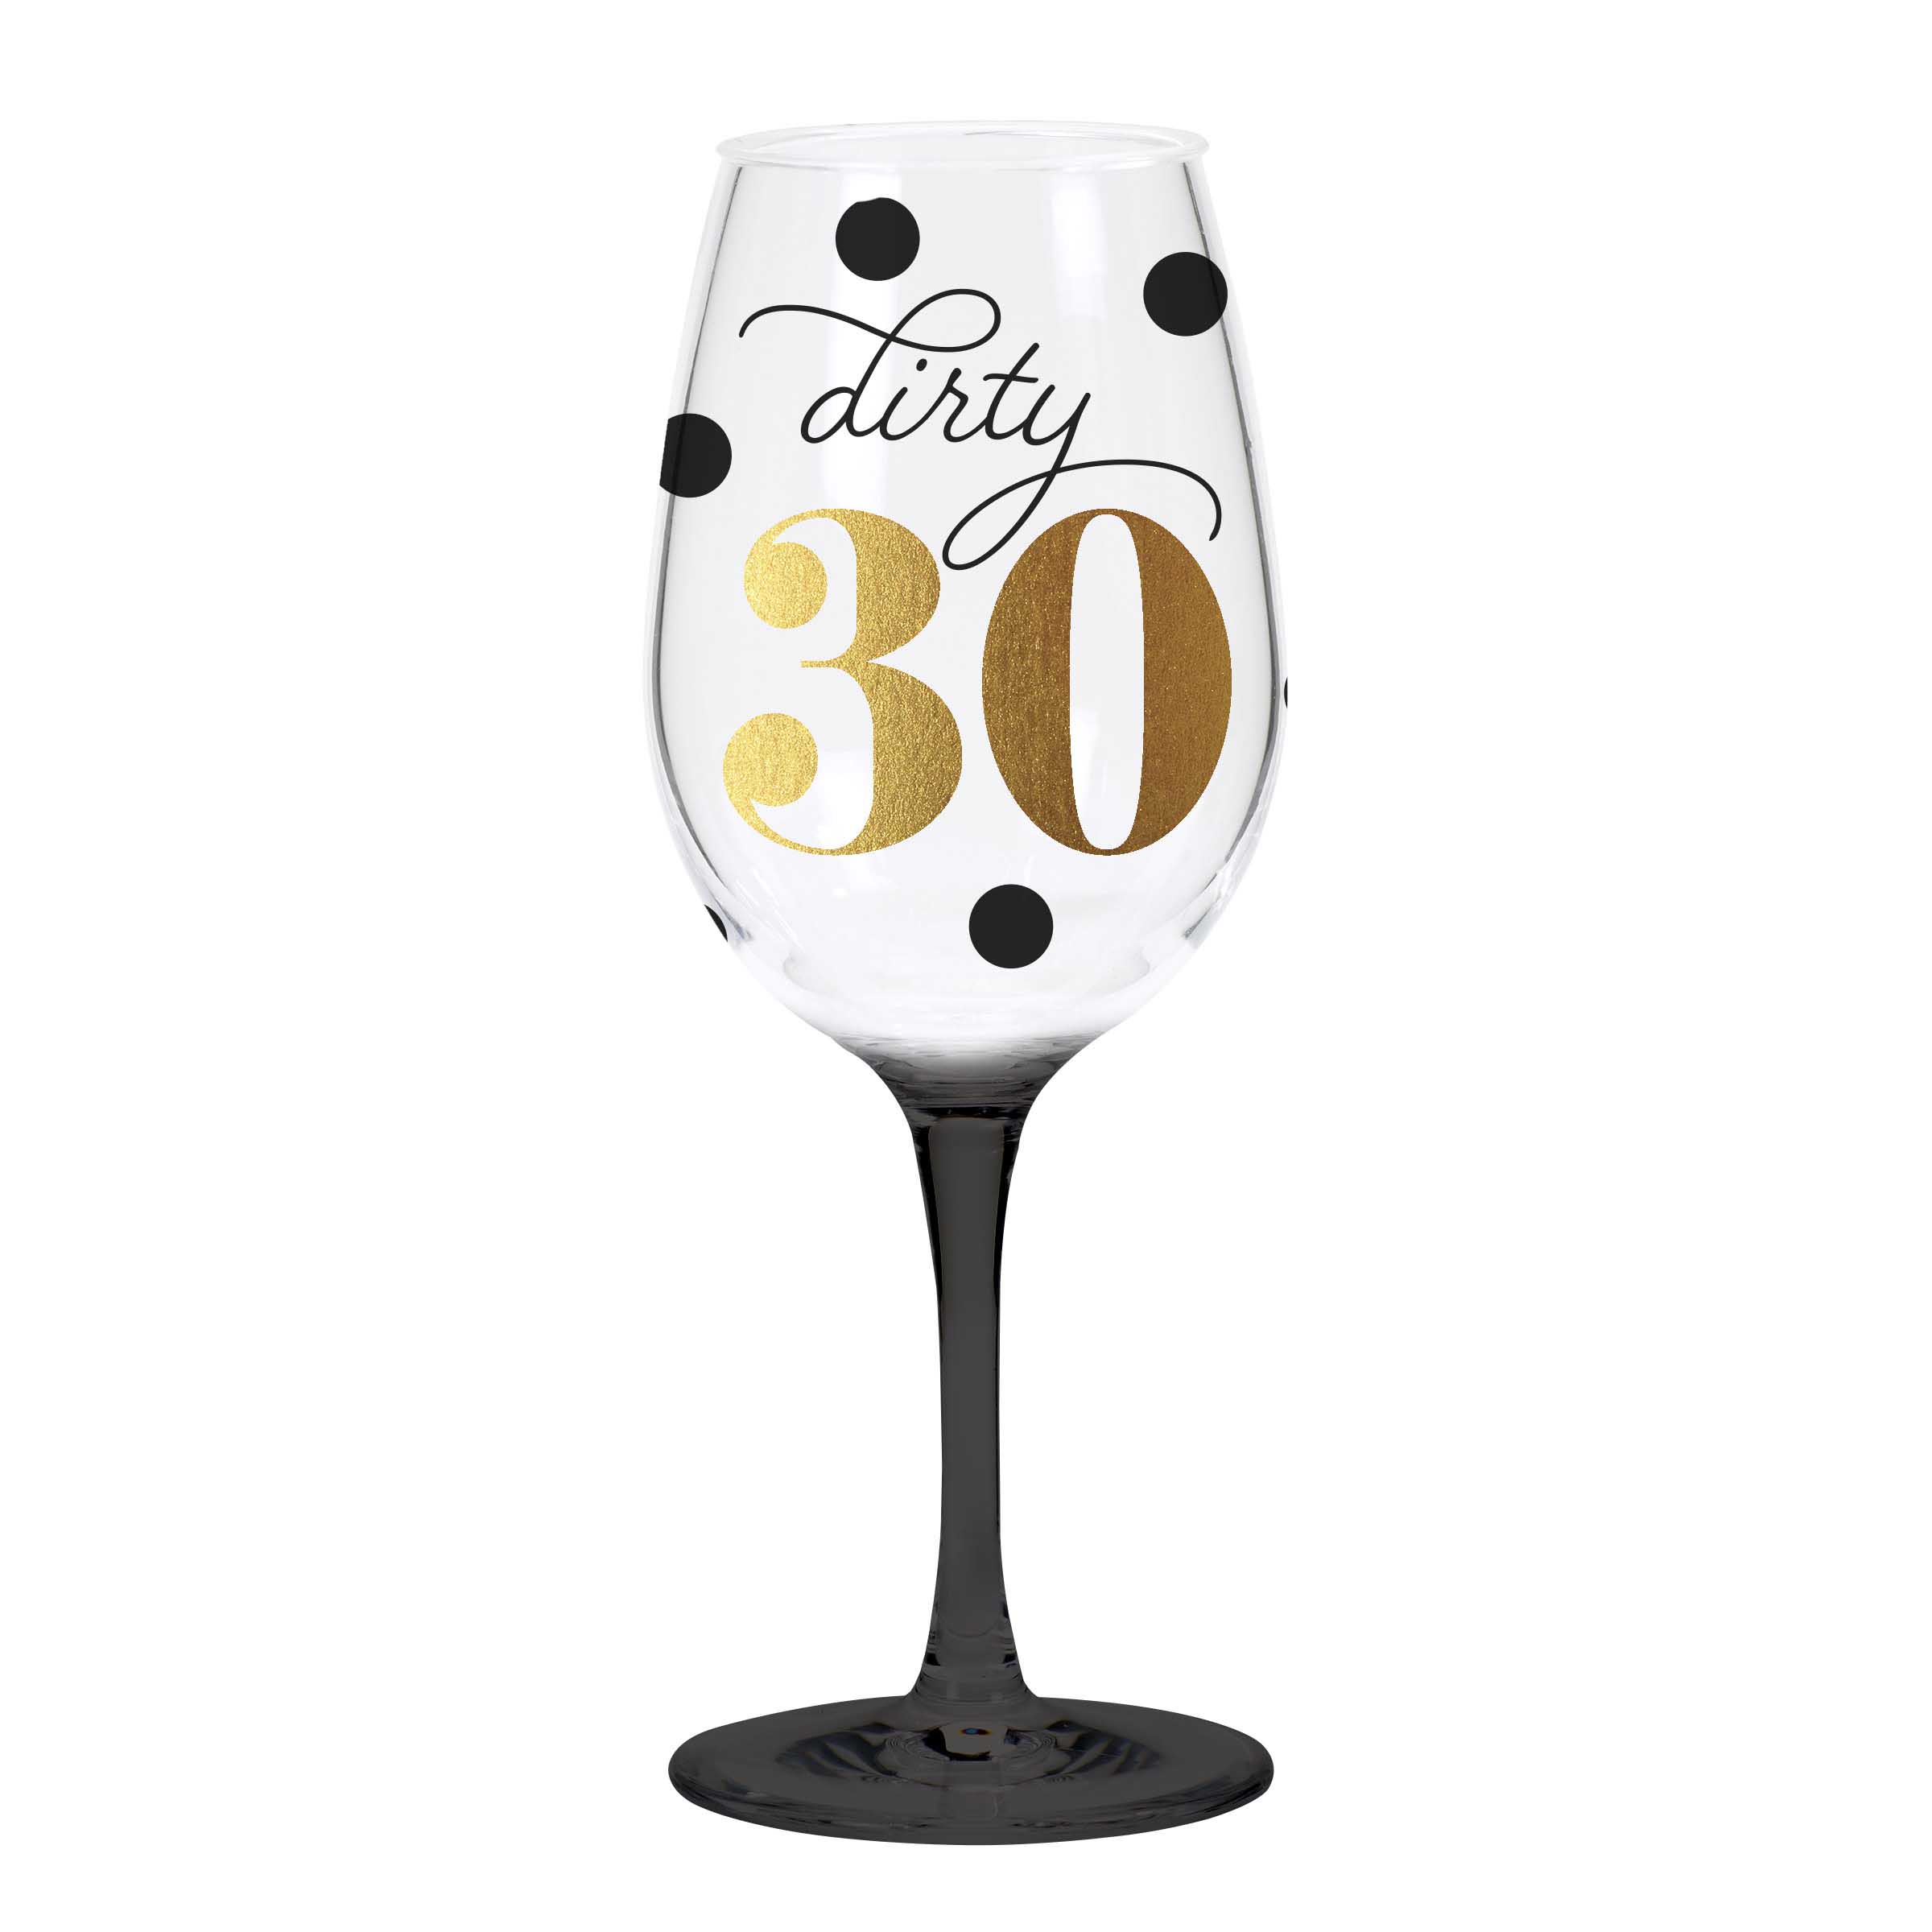 30th Birthday Acrylic Wine Glass